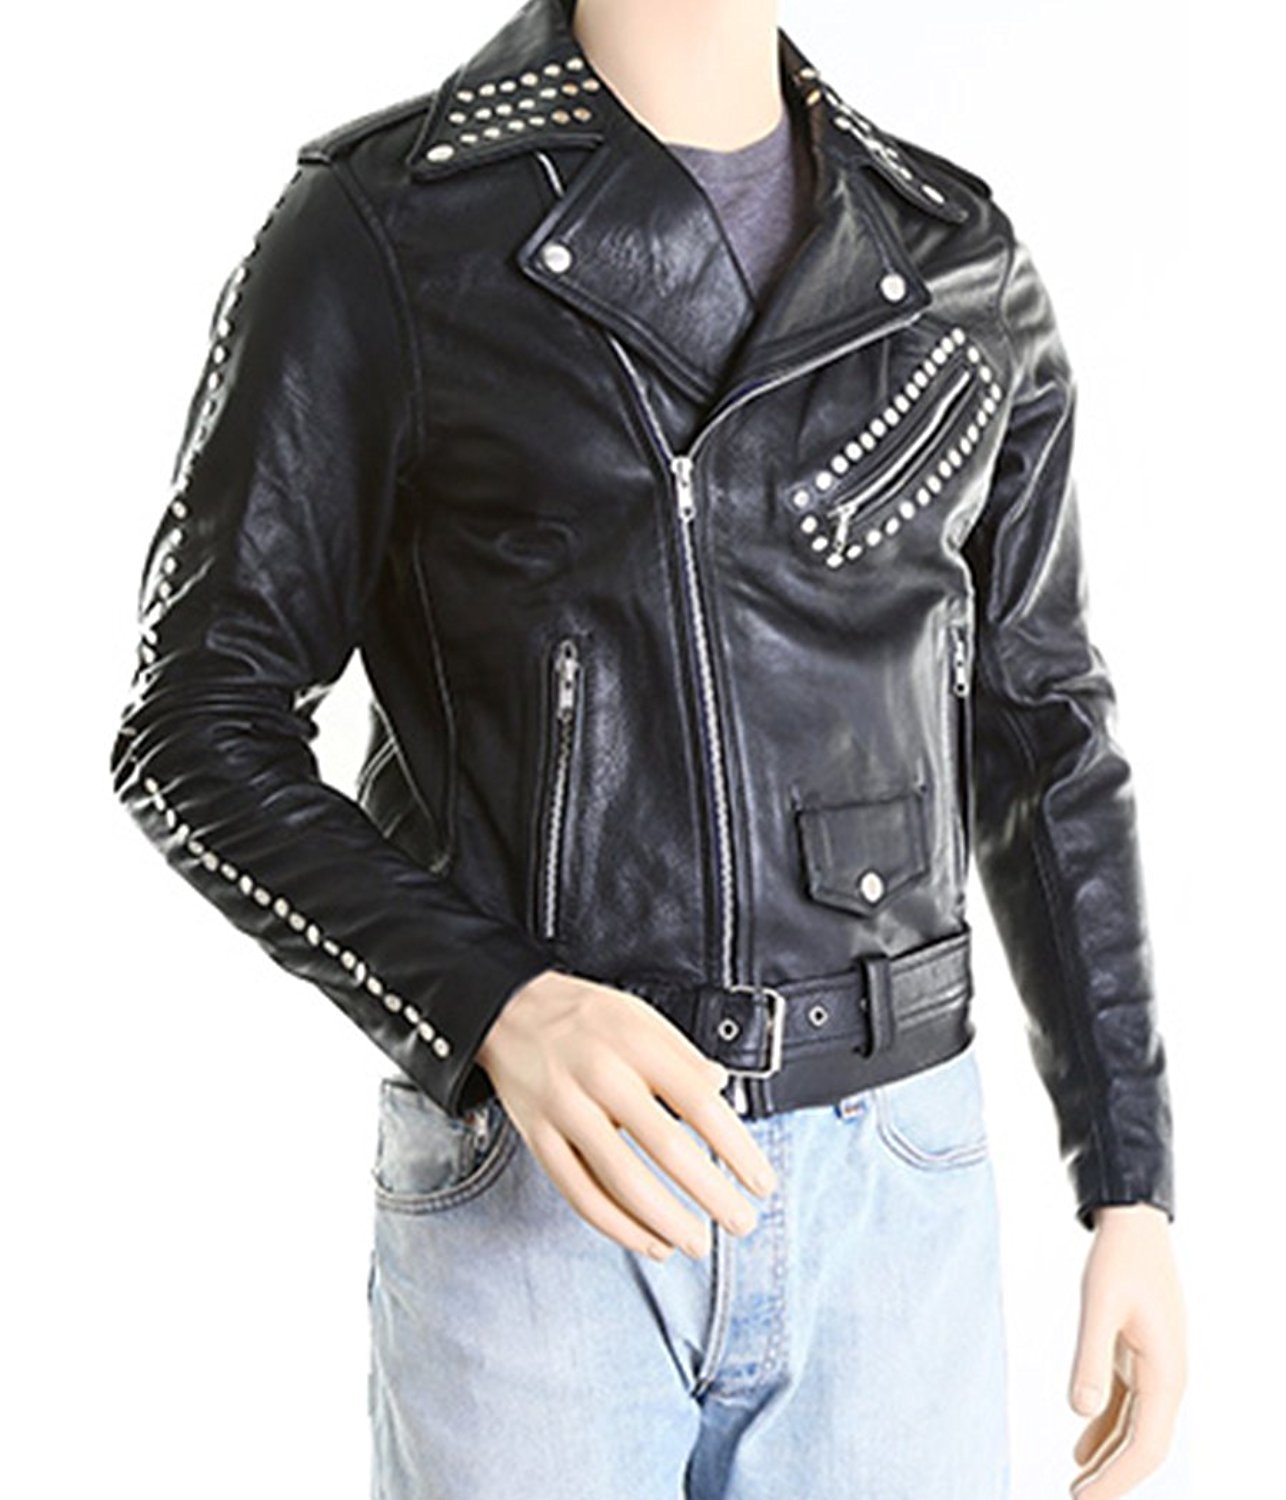 All around the World - Black Leather Jacket | Men's Celebrity Leather Jacket